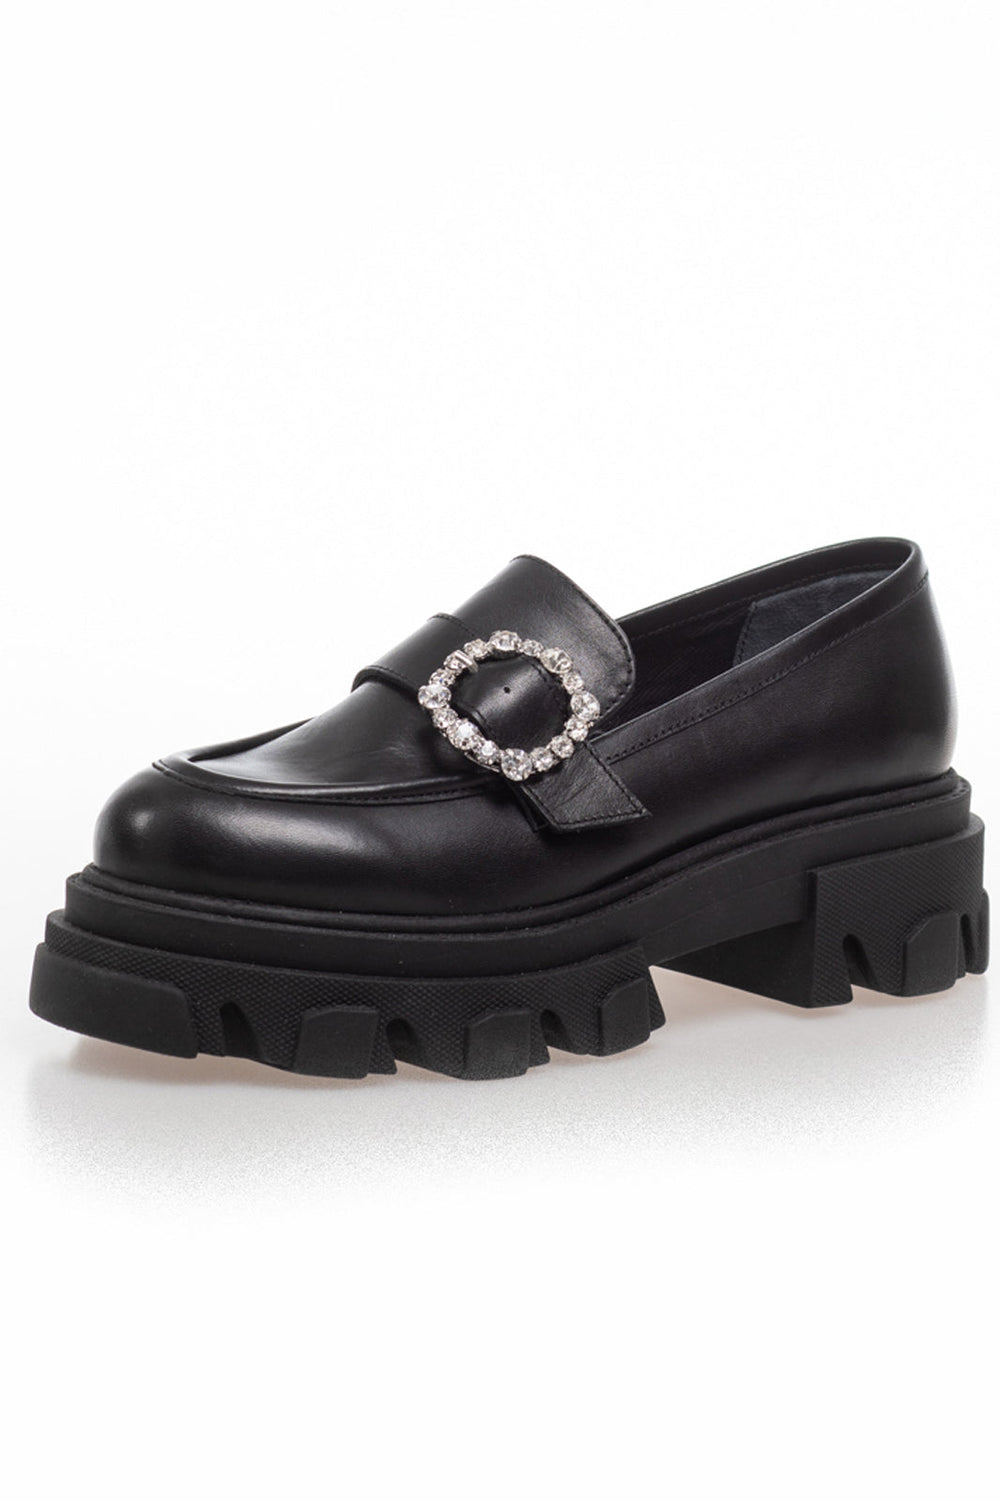 Copenhagen Shoes - Soul Loafer - 0001 Black Sko 